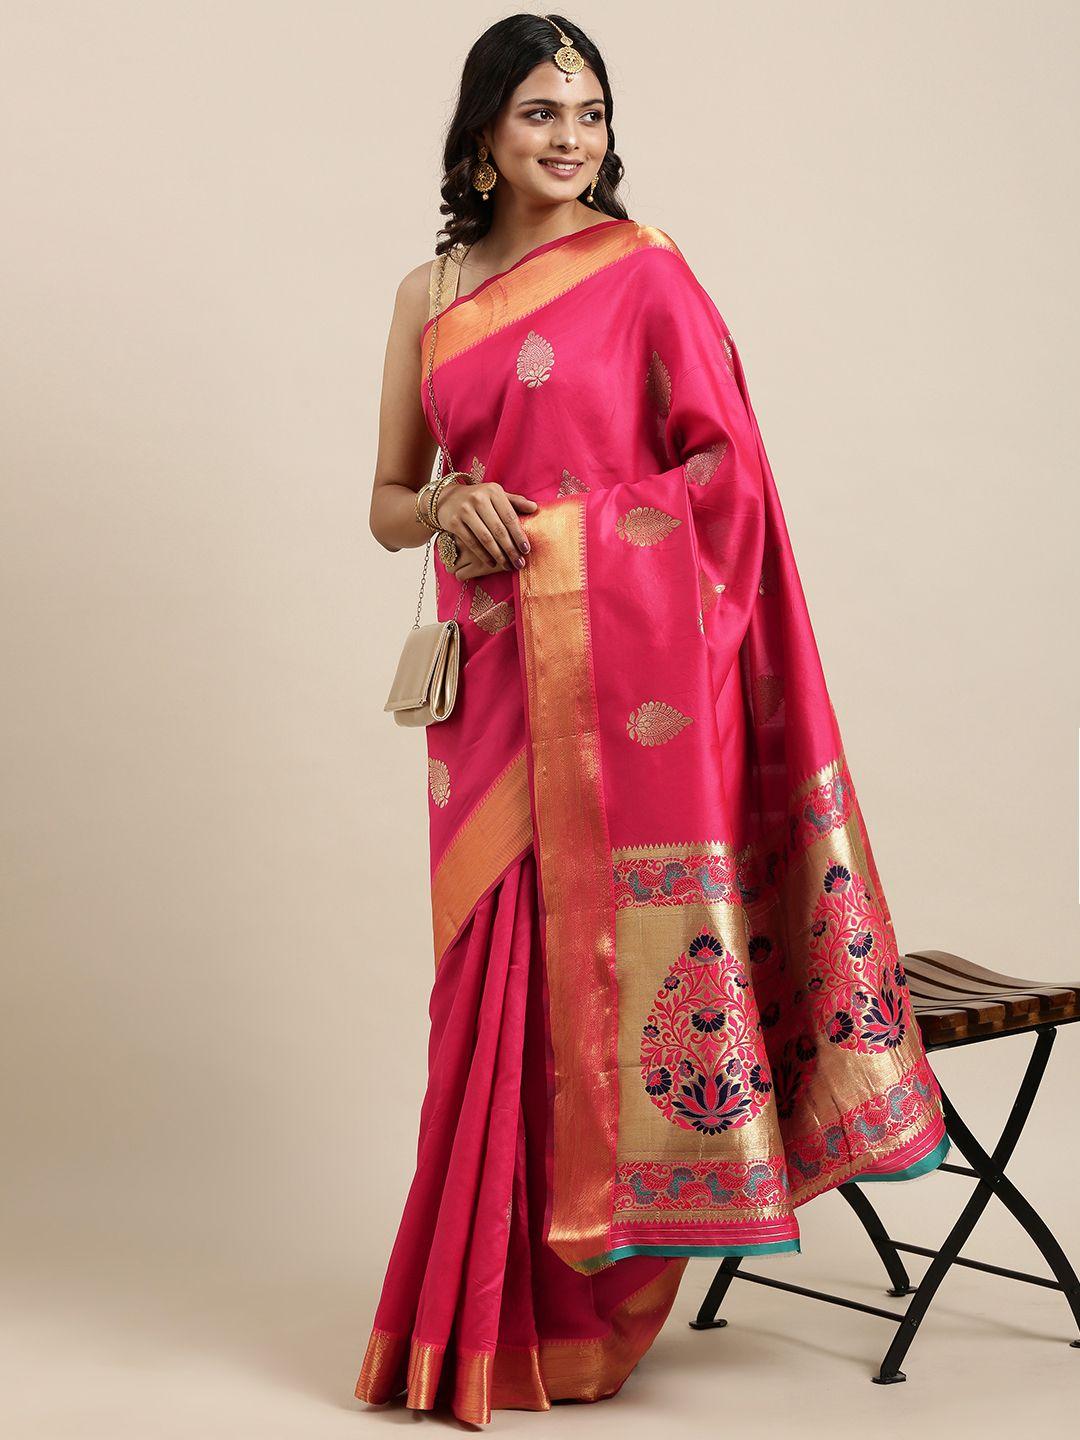 mitera women pink & golden ethnic motifs printed saree